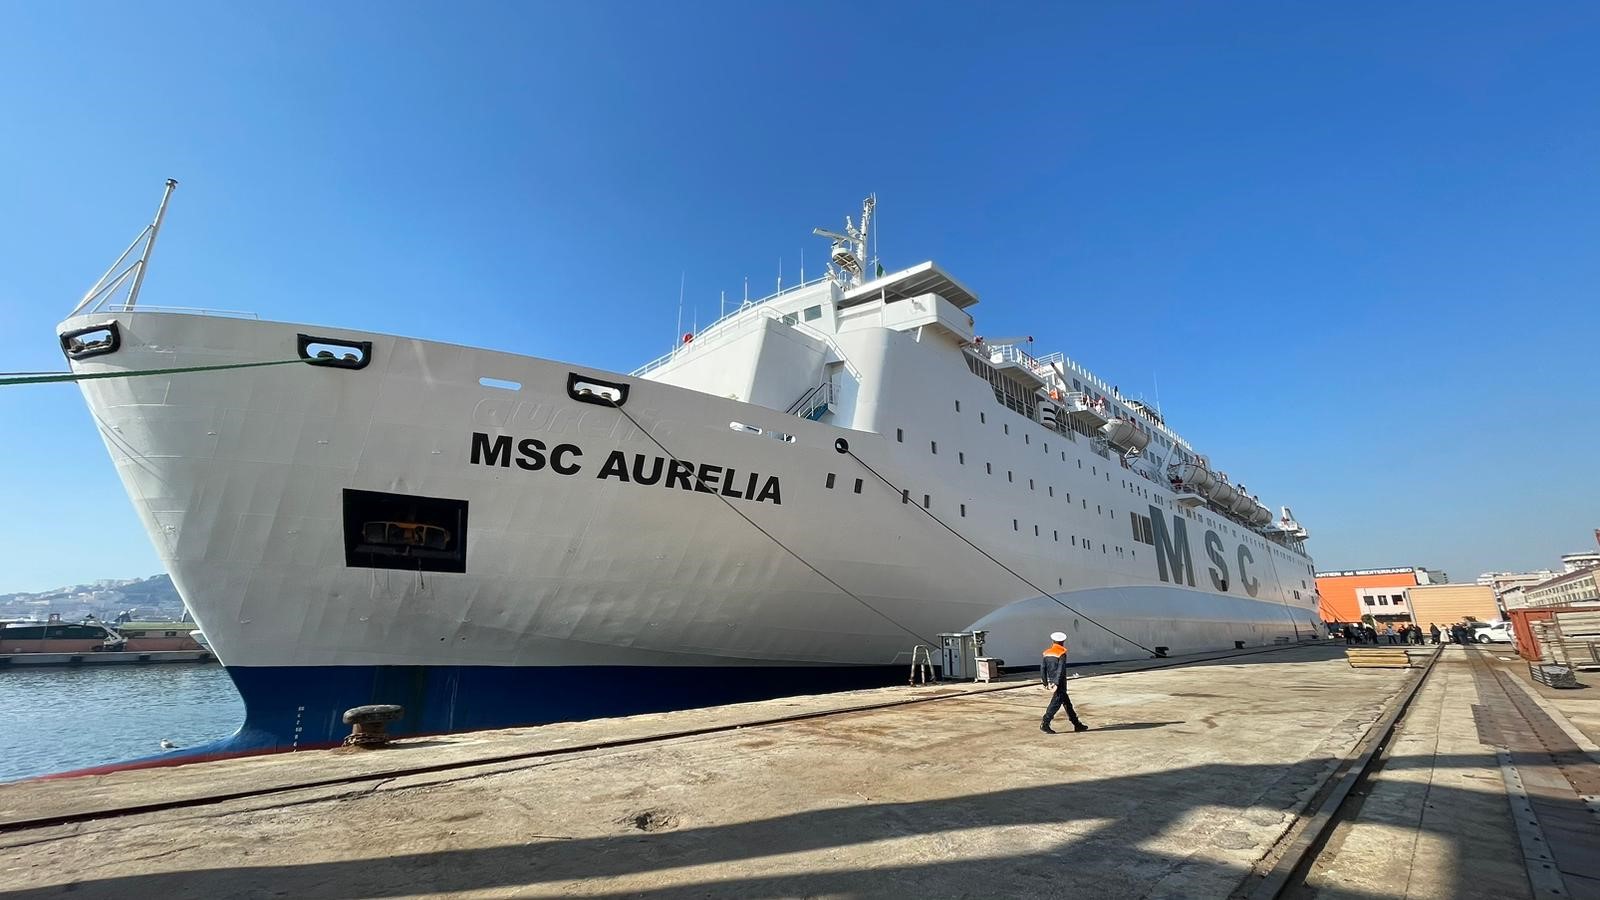 MSC地中海航运集团携手MSC地中海基金会支持土耳其和叙利亚的地震救援行动